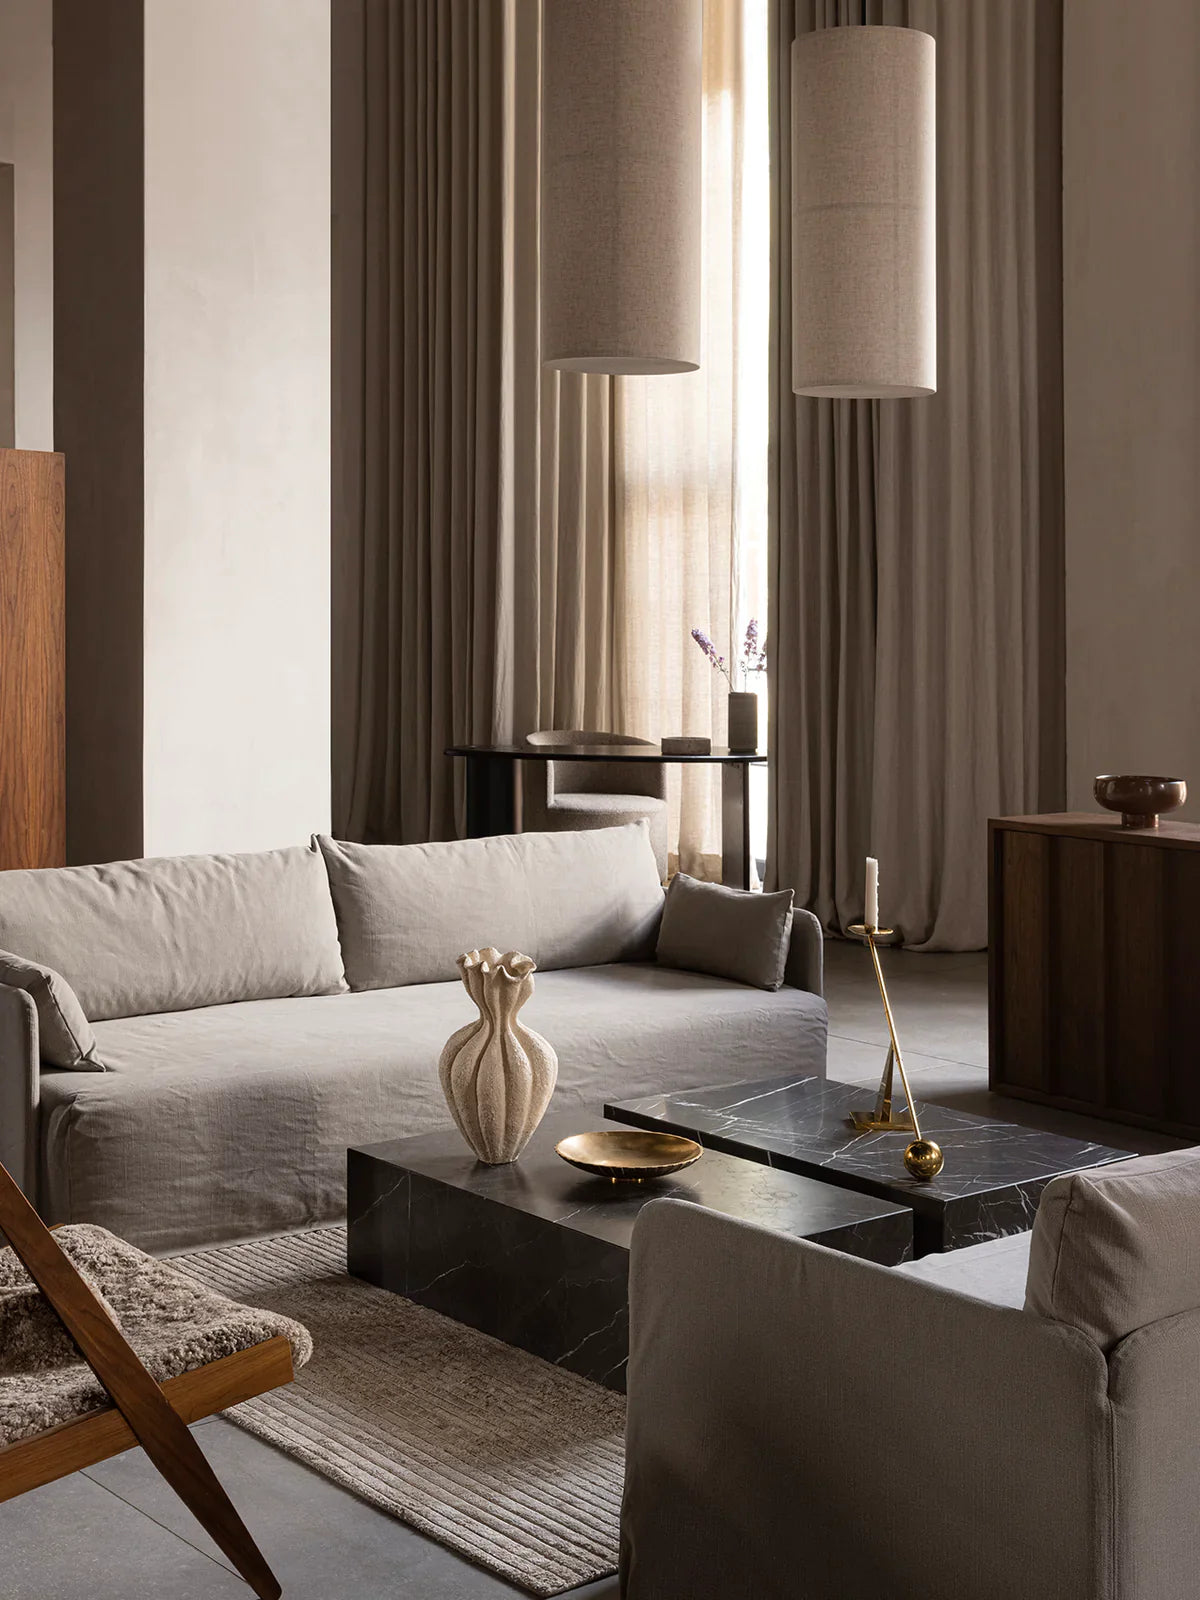 Menu Hashira Pendant Lamps in a design interior living room space.